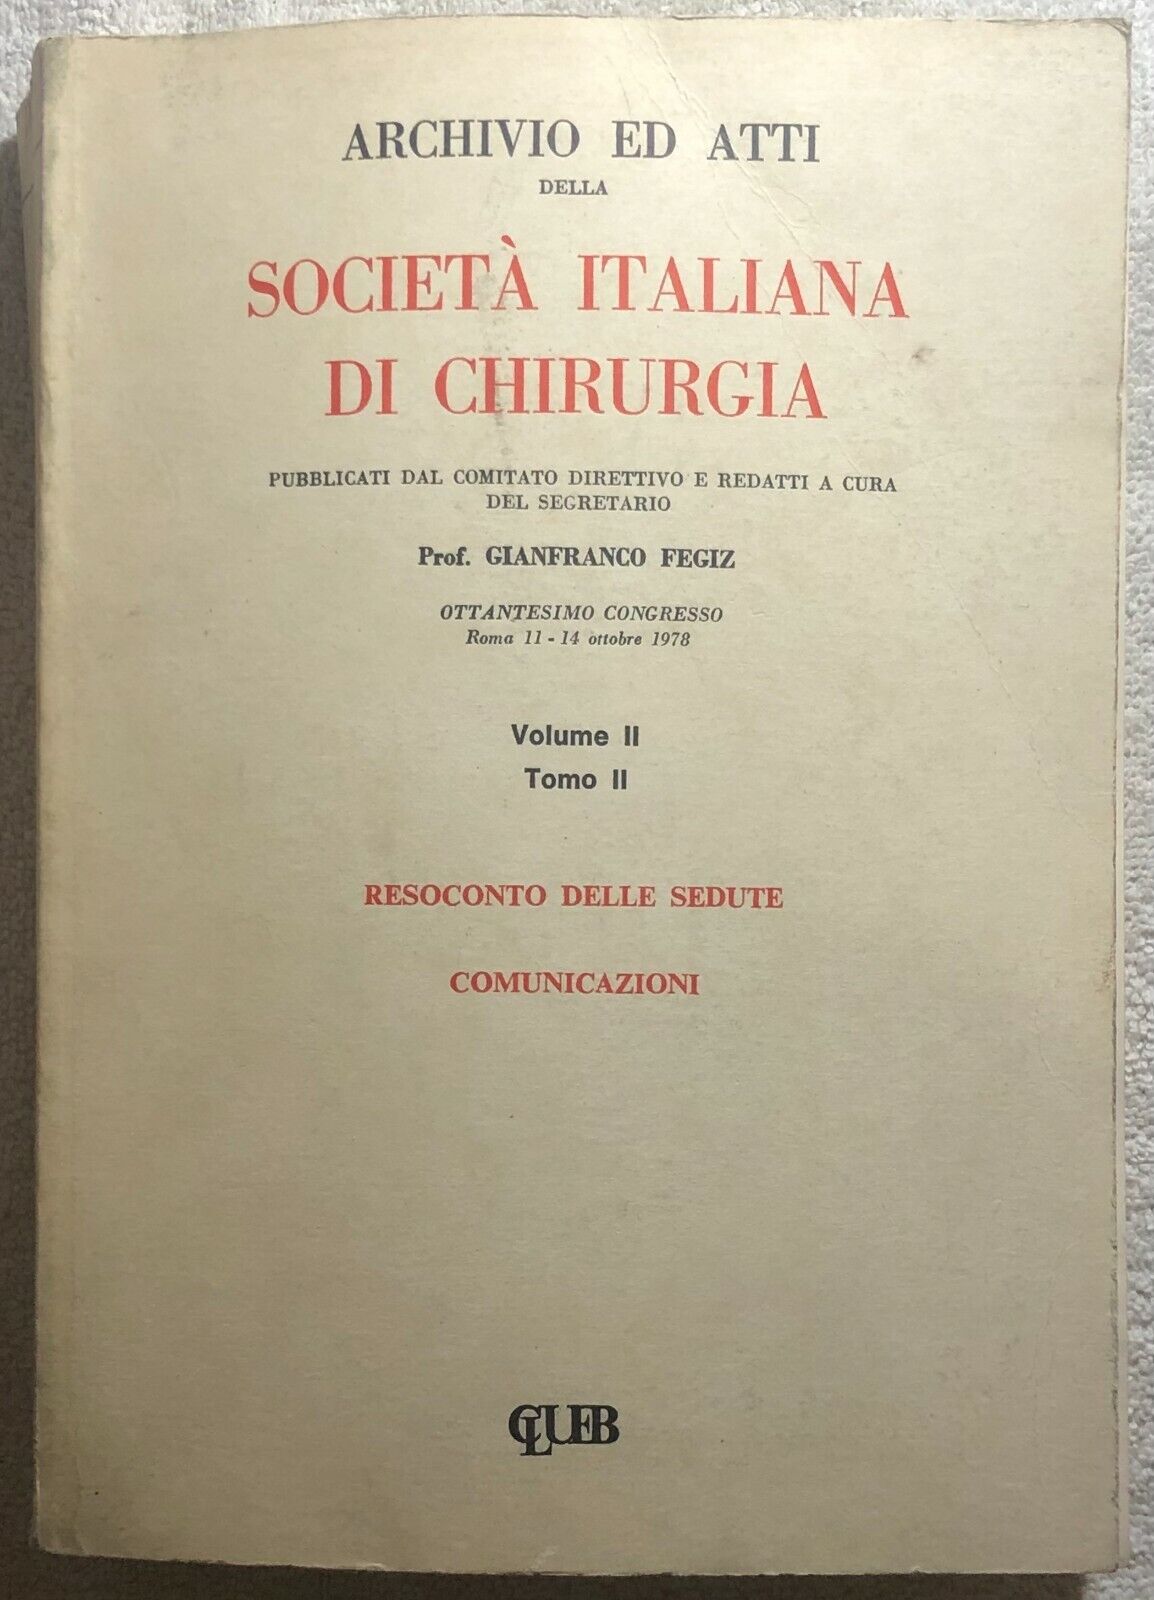  Societ? italiana di chirurgia 6 Vol. di Prof. Gianfranco Fegiz, 1980, CLUEB